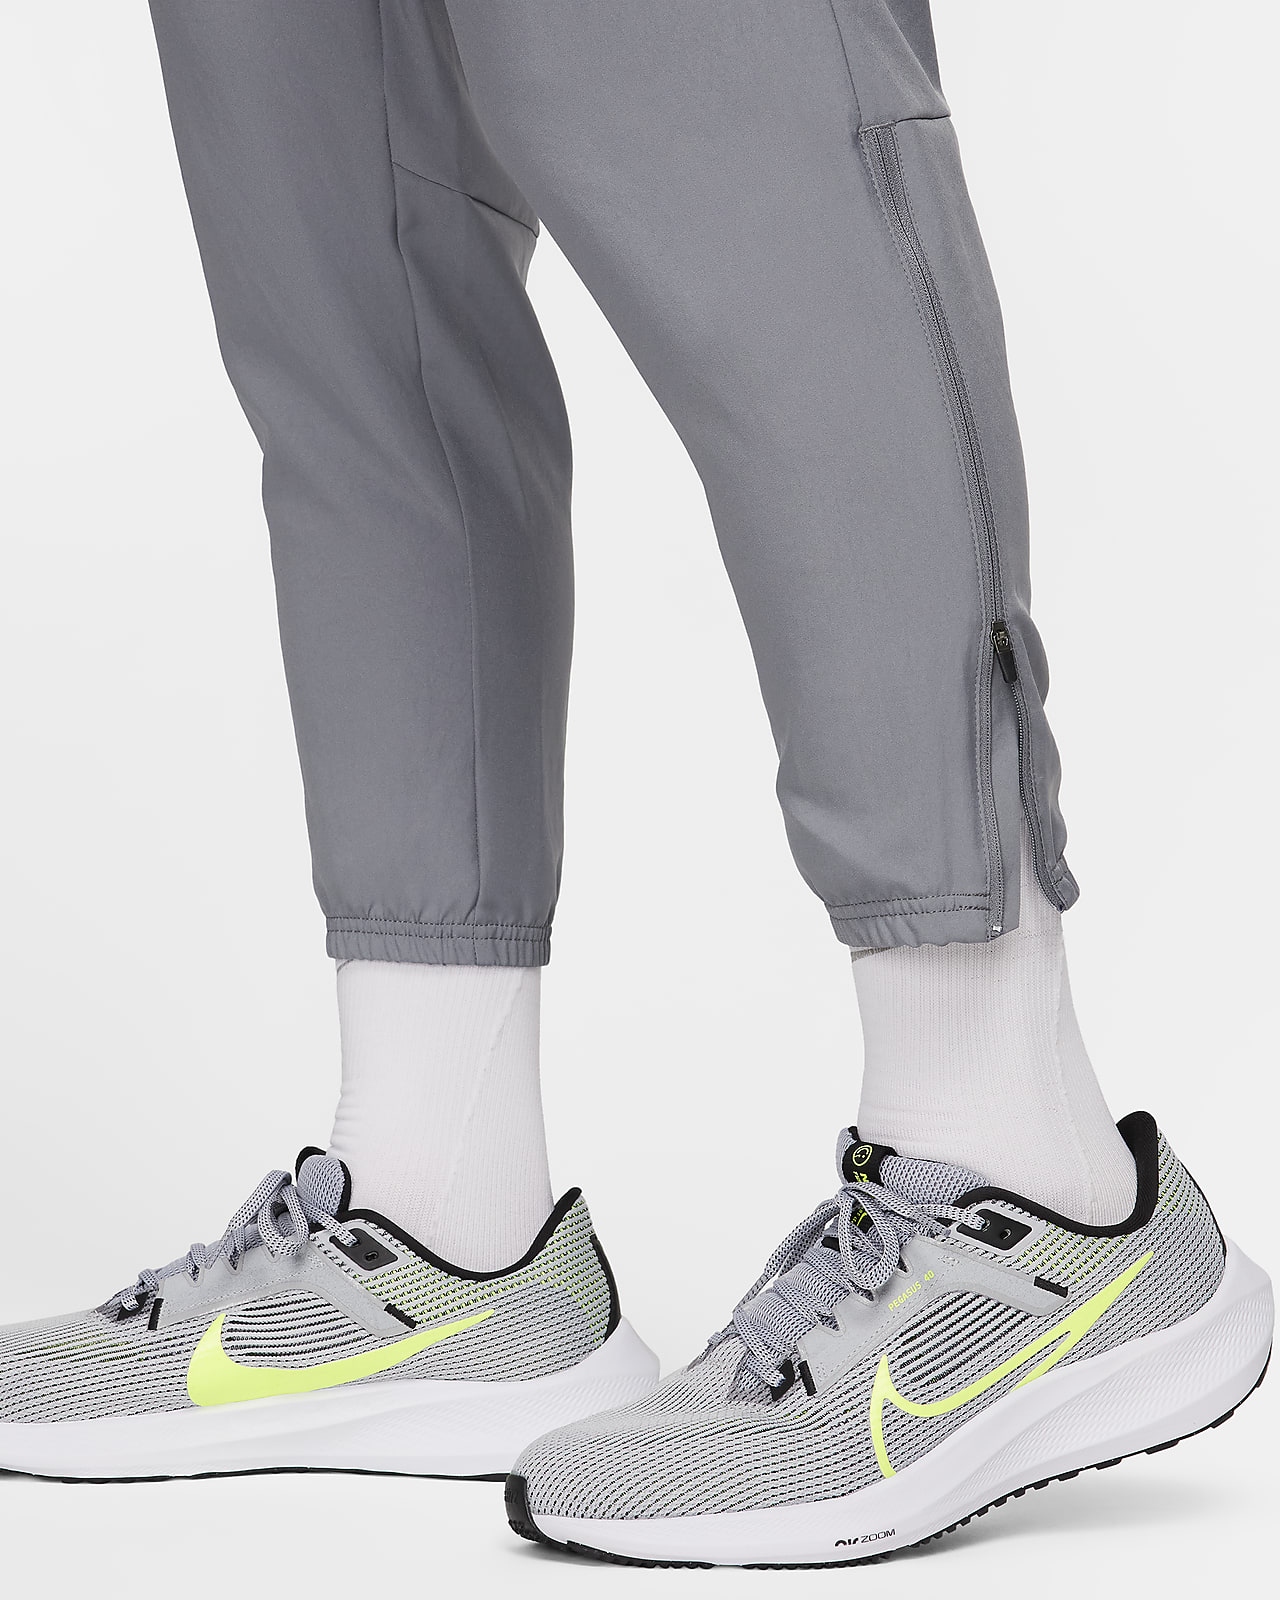 Nike Dri-Fit Challenger Woven Running Pants Men - black/reflective